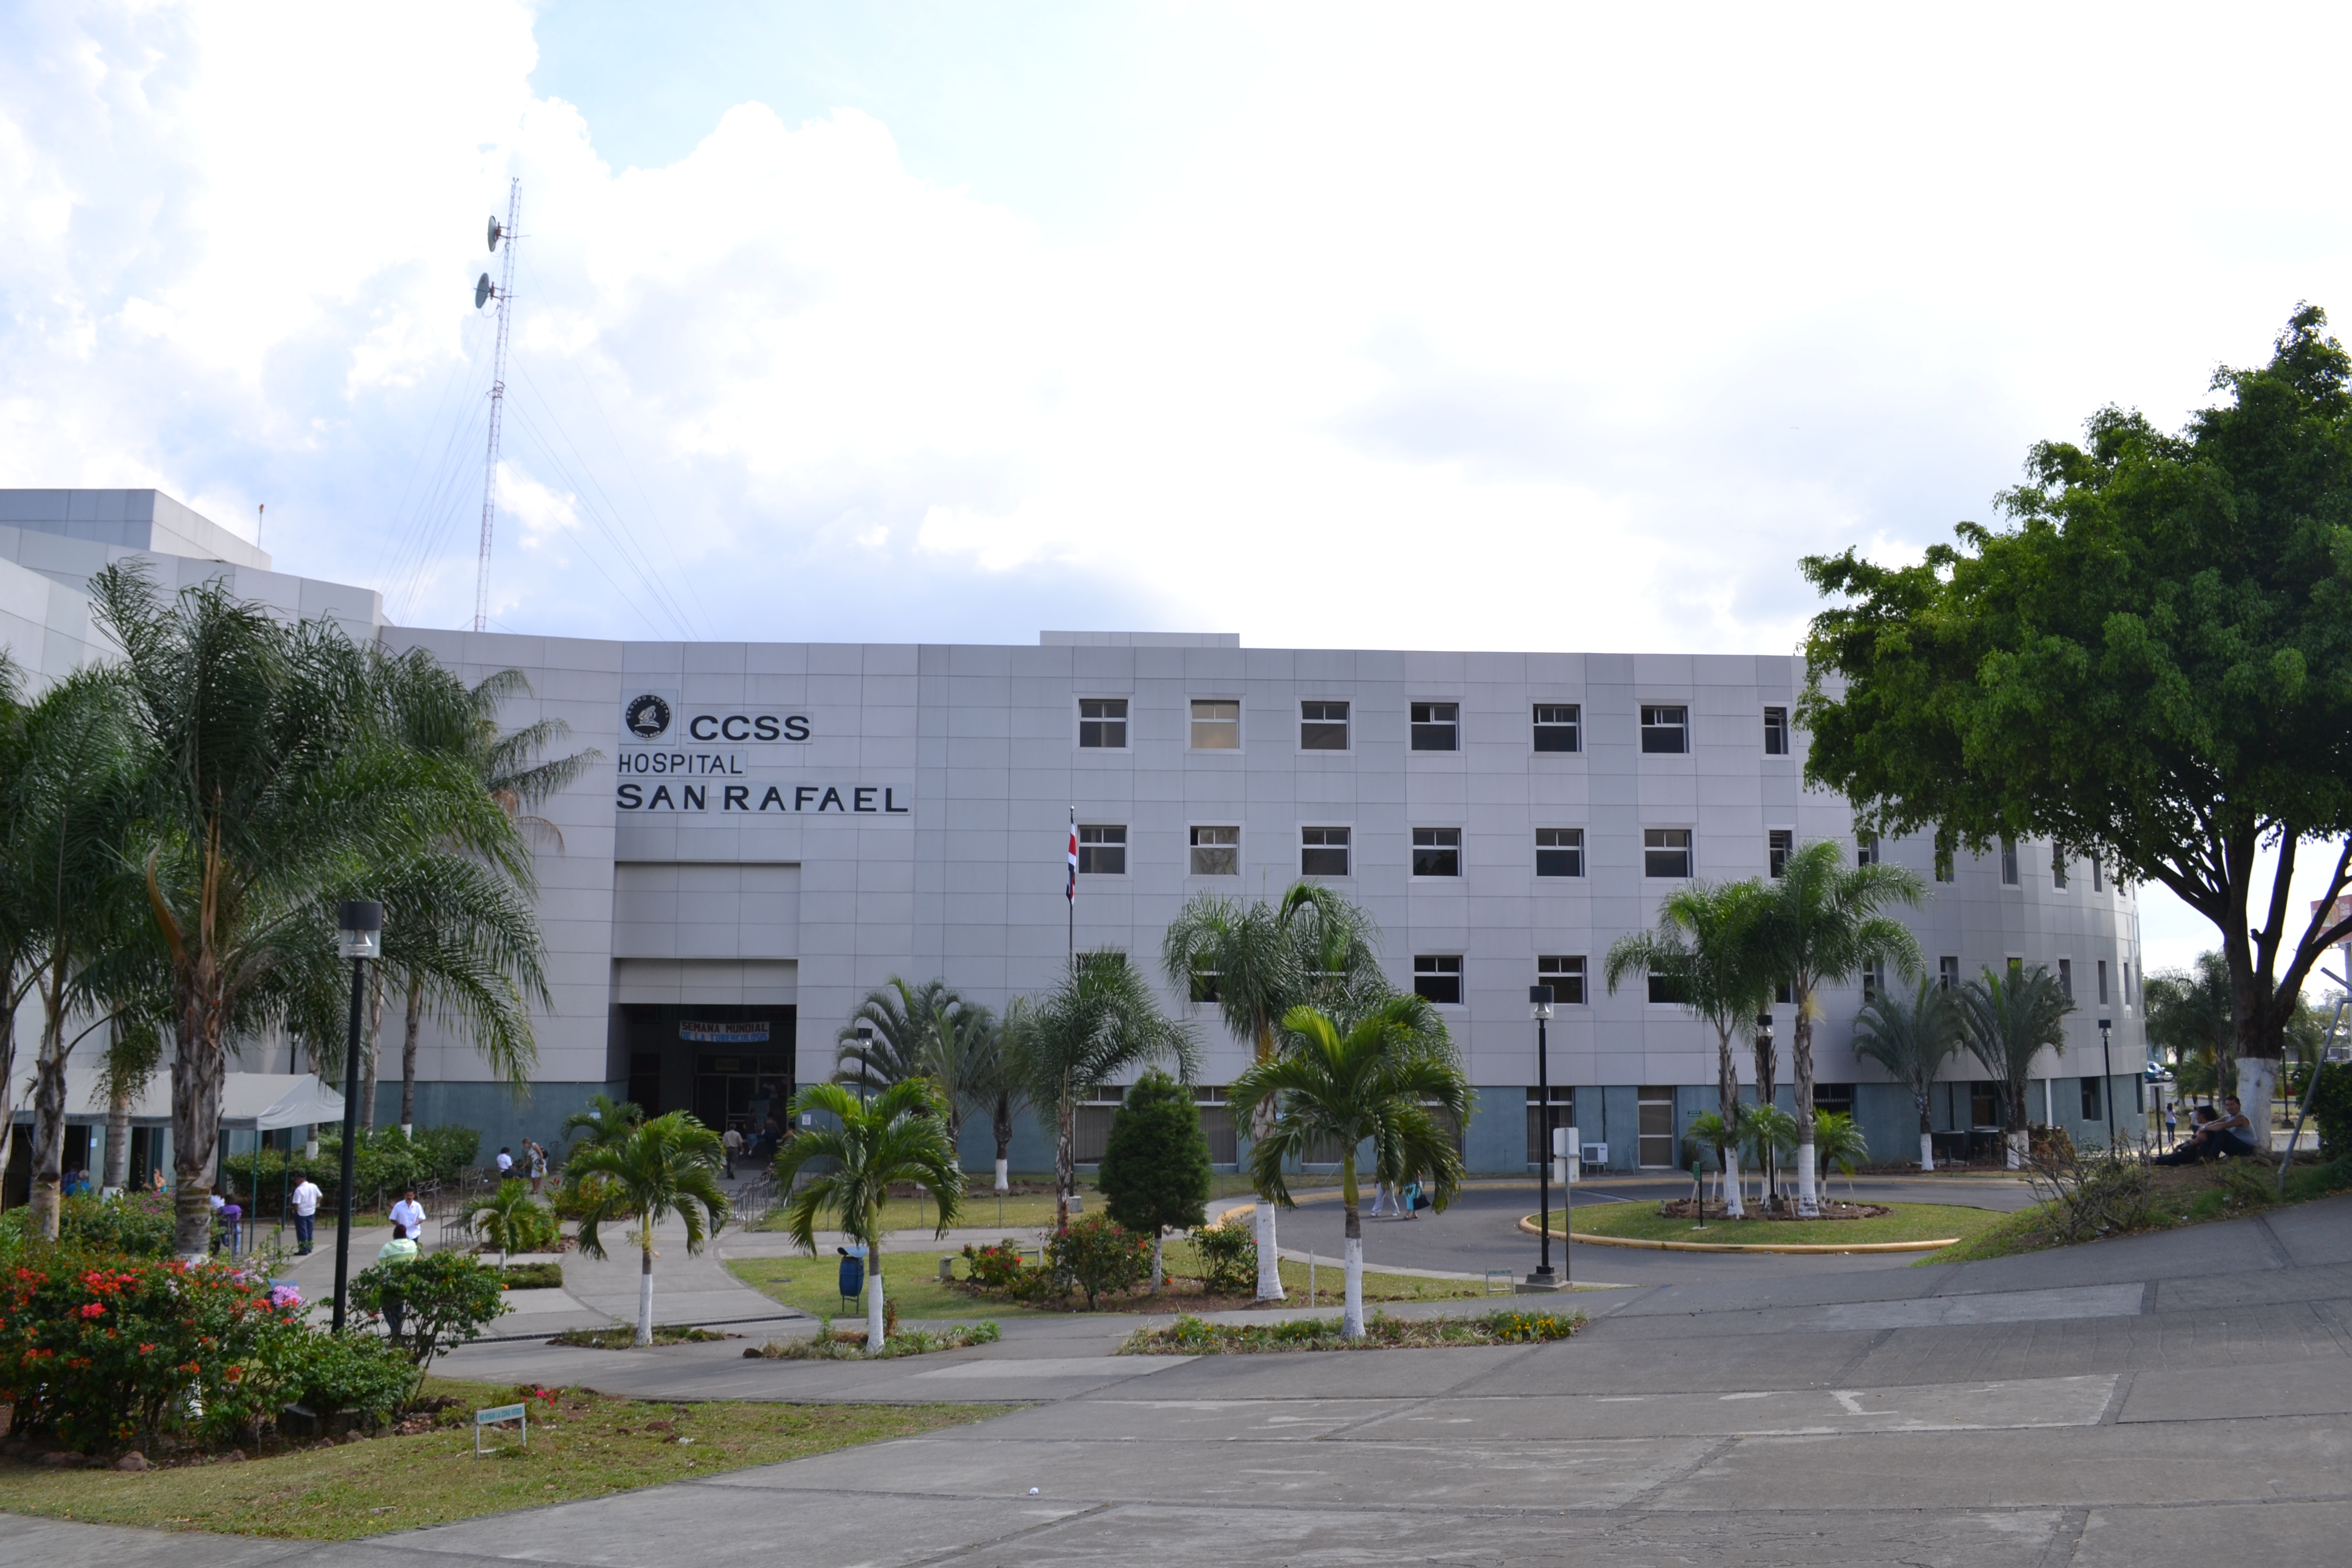 Foto: Hospital San Rafael - Alajuela, Costa Rica